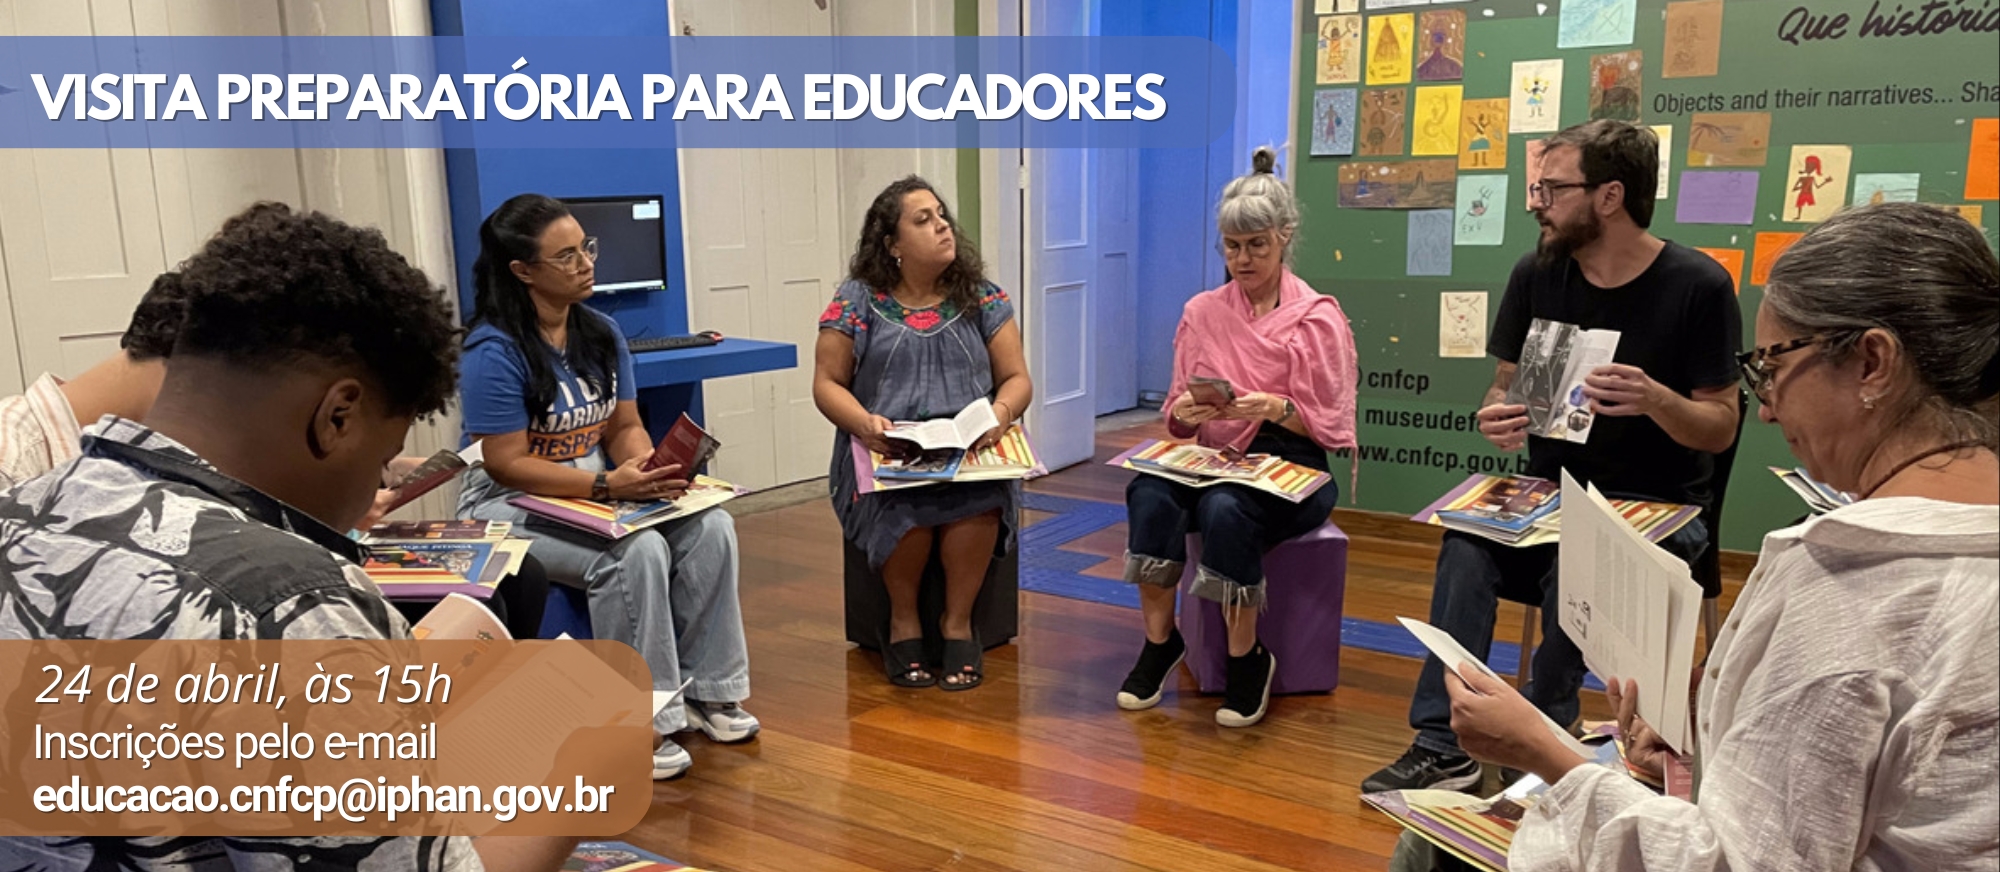 BANNER VISITA PREPARATÓRIA PARA EDUCADORES - CNFCP.jpg